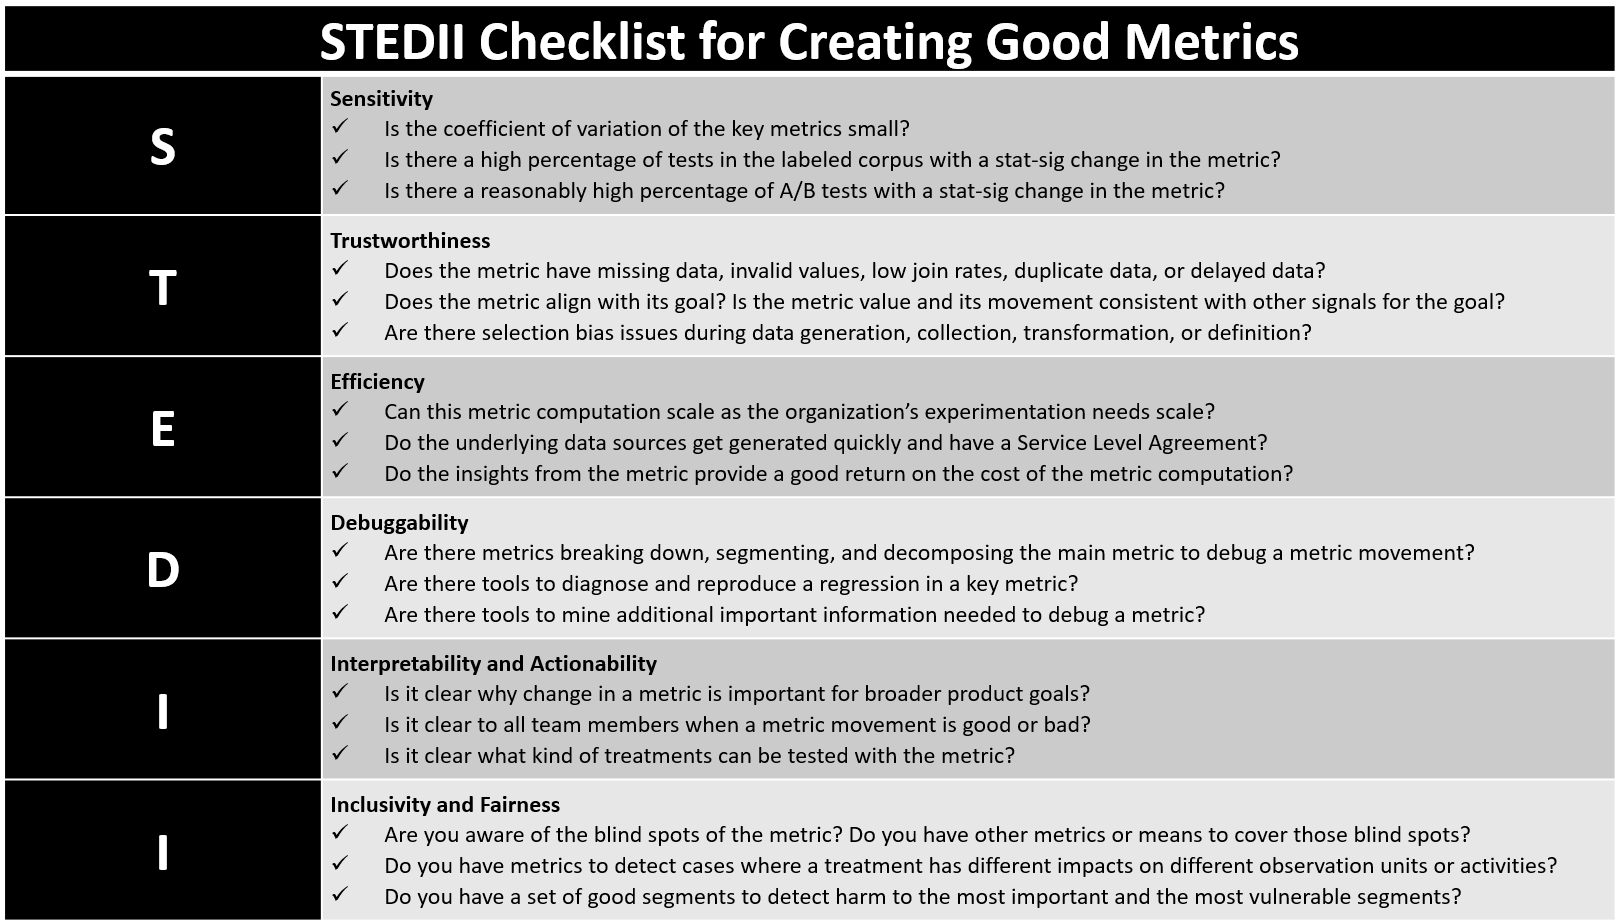 STEDII Checklist for Creating Good Metrics